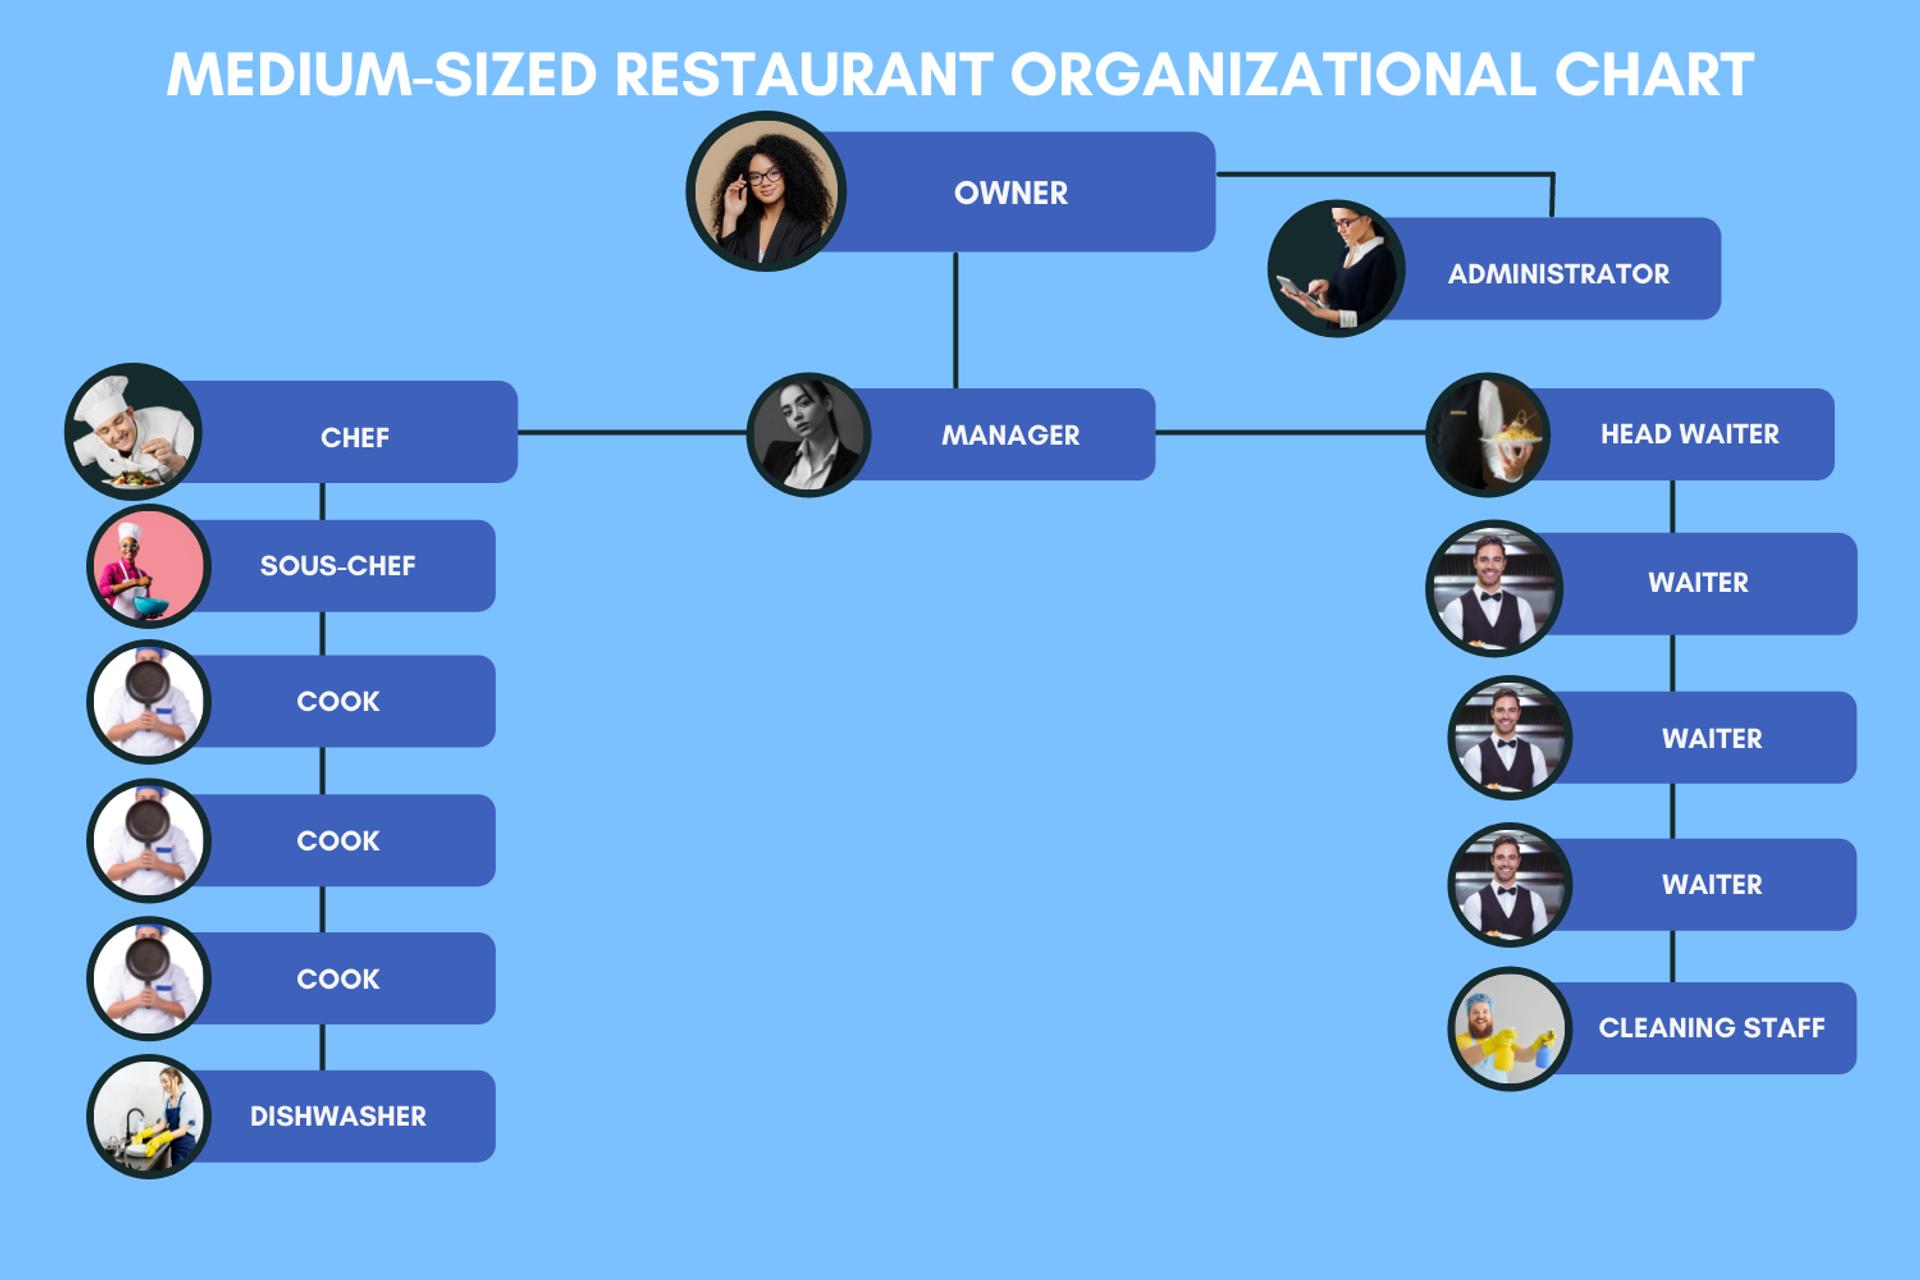 Medium-sized restaurant organizational chart